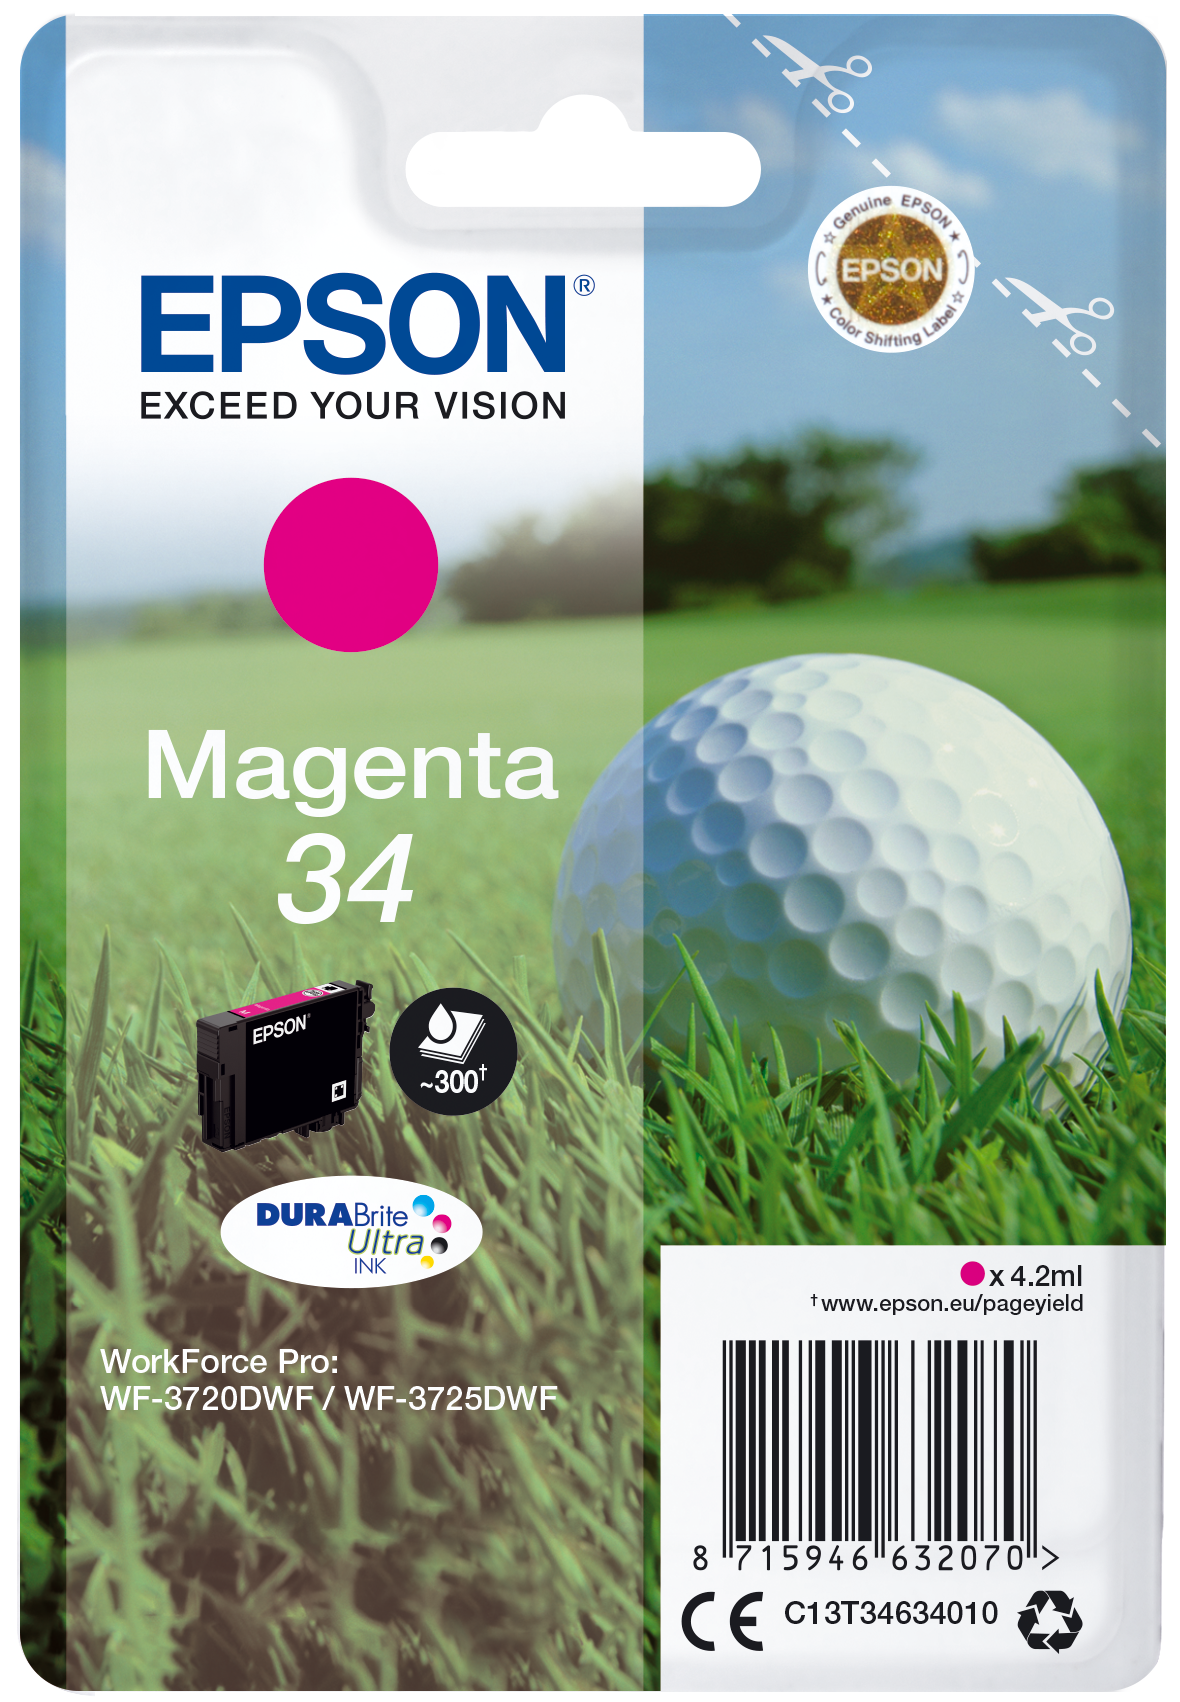 Epson Golf ball Singlepack Magenta 34 DURABrite Ultra Ink single pack / magenta